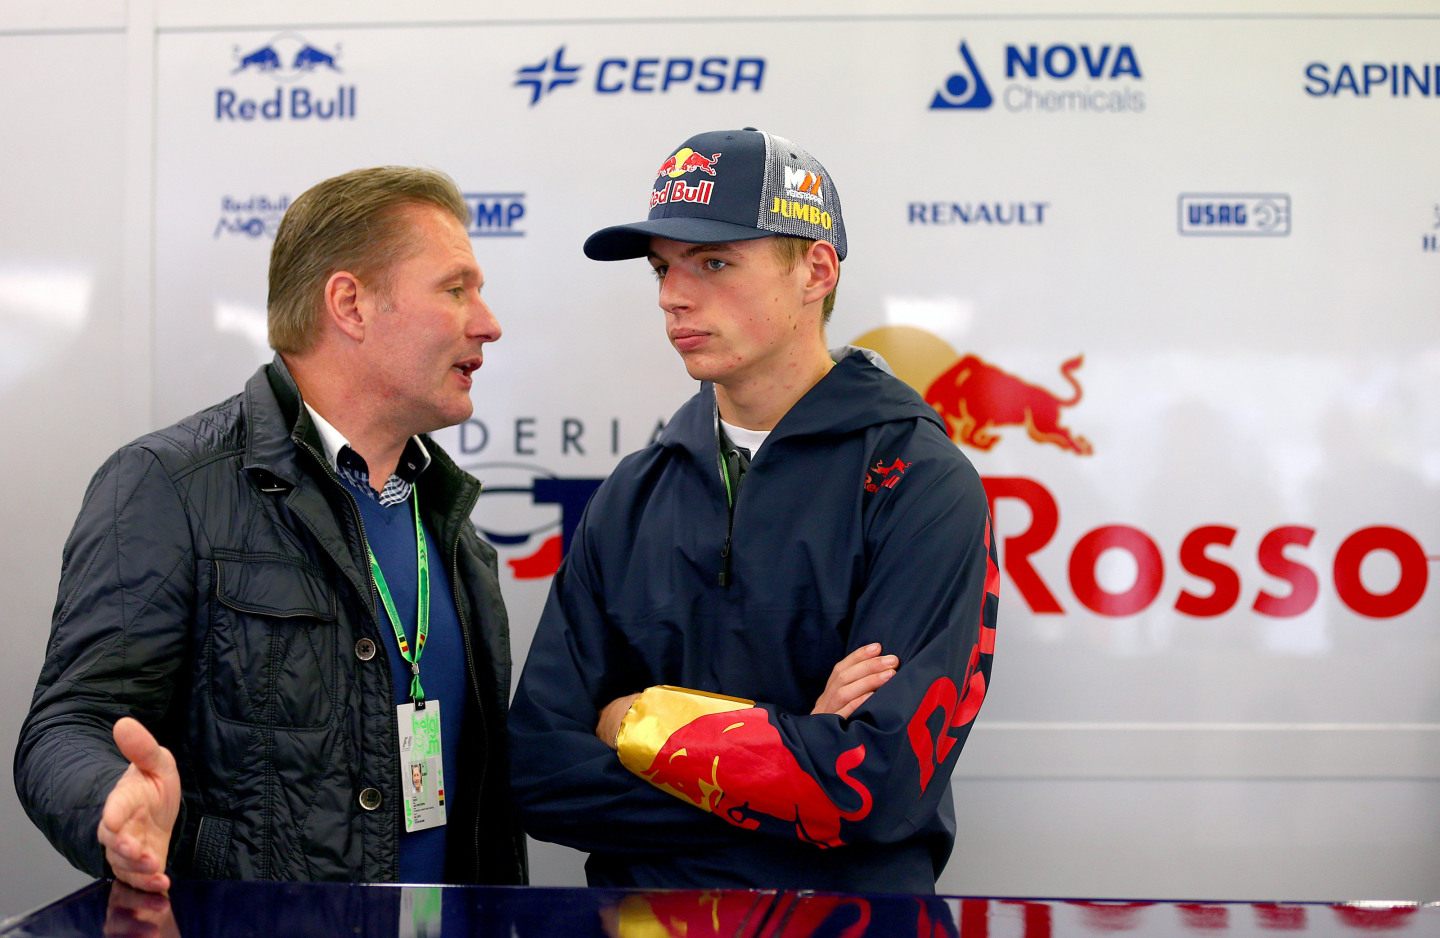 В Формуле 1 Макс Ферстаппен дебютировал в 17 лет © Red Bull Content Pool / Getty Images